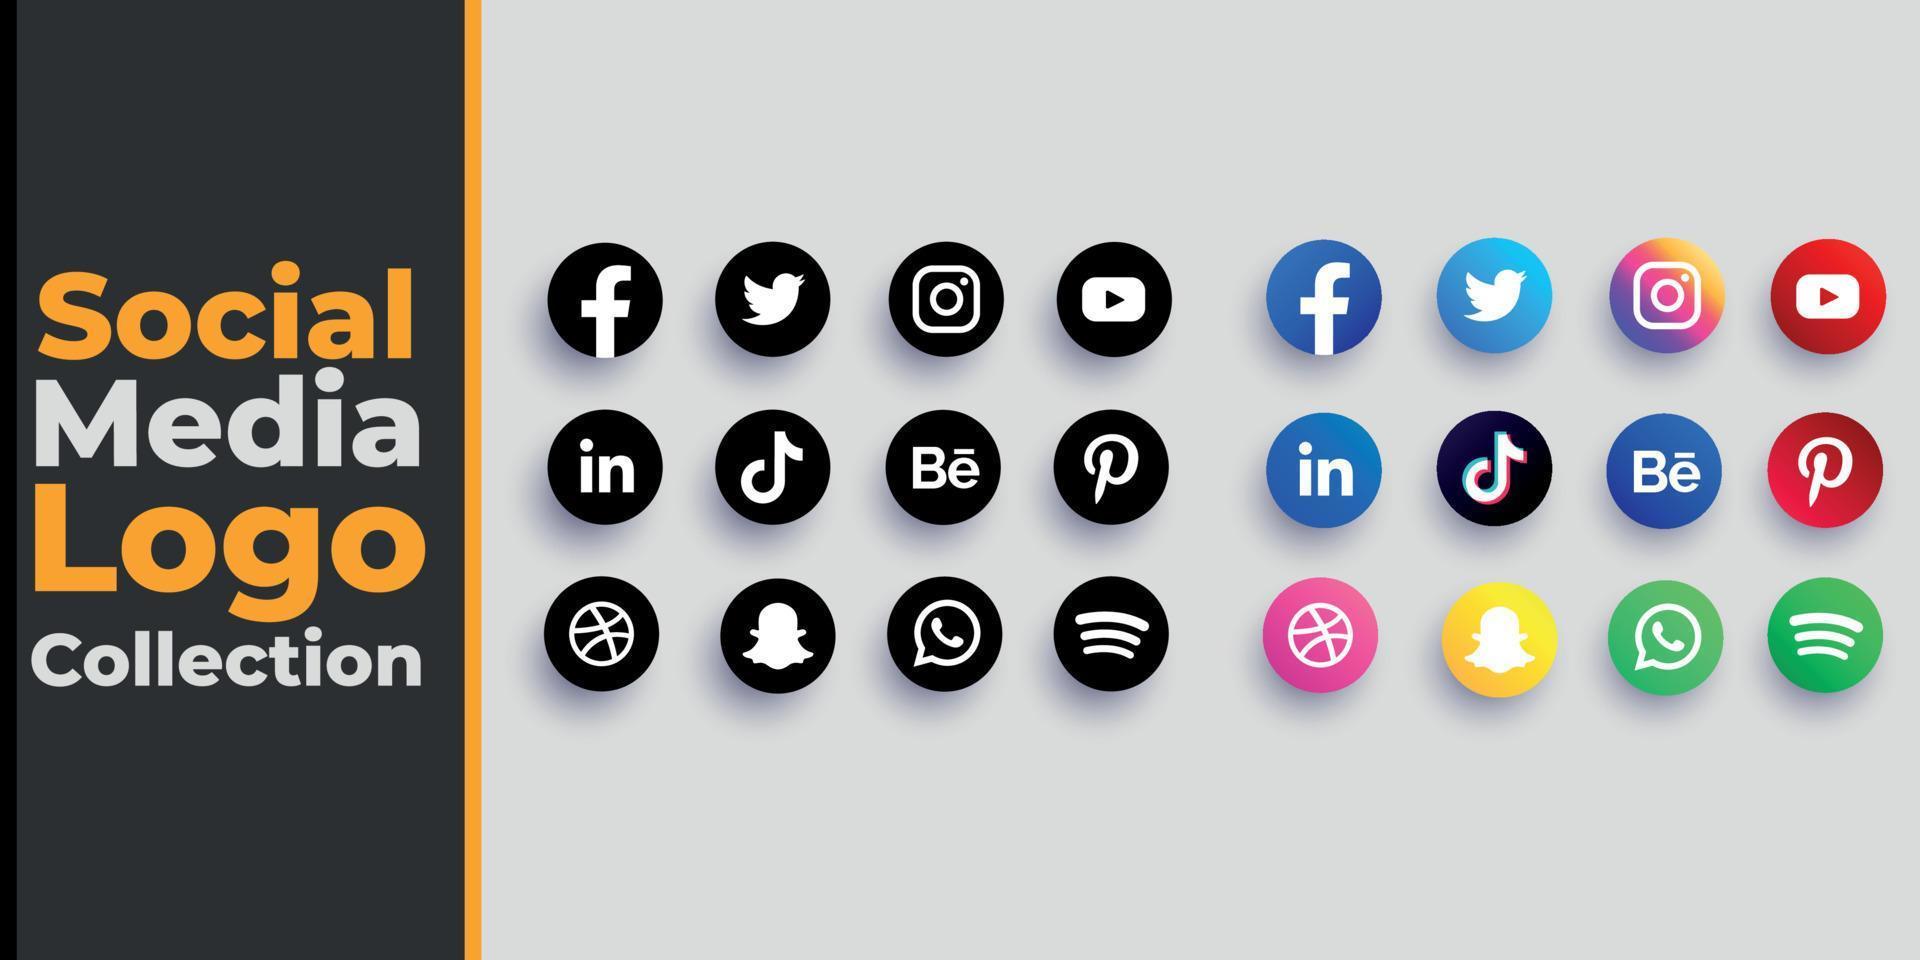 Social Media Logo Collection Pack vector